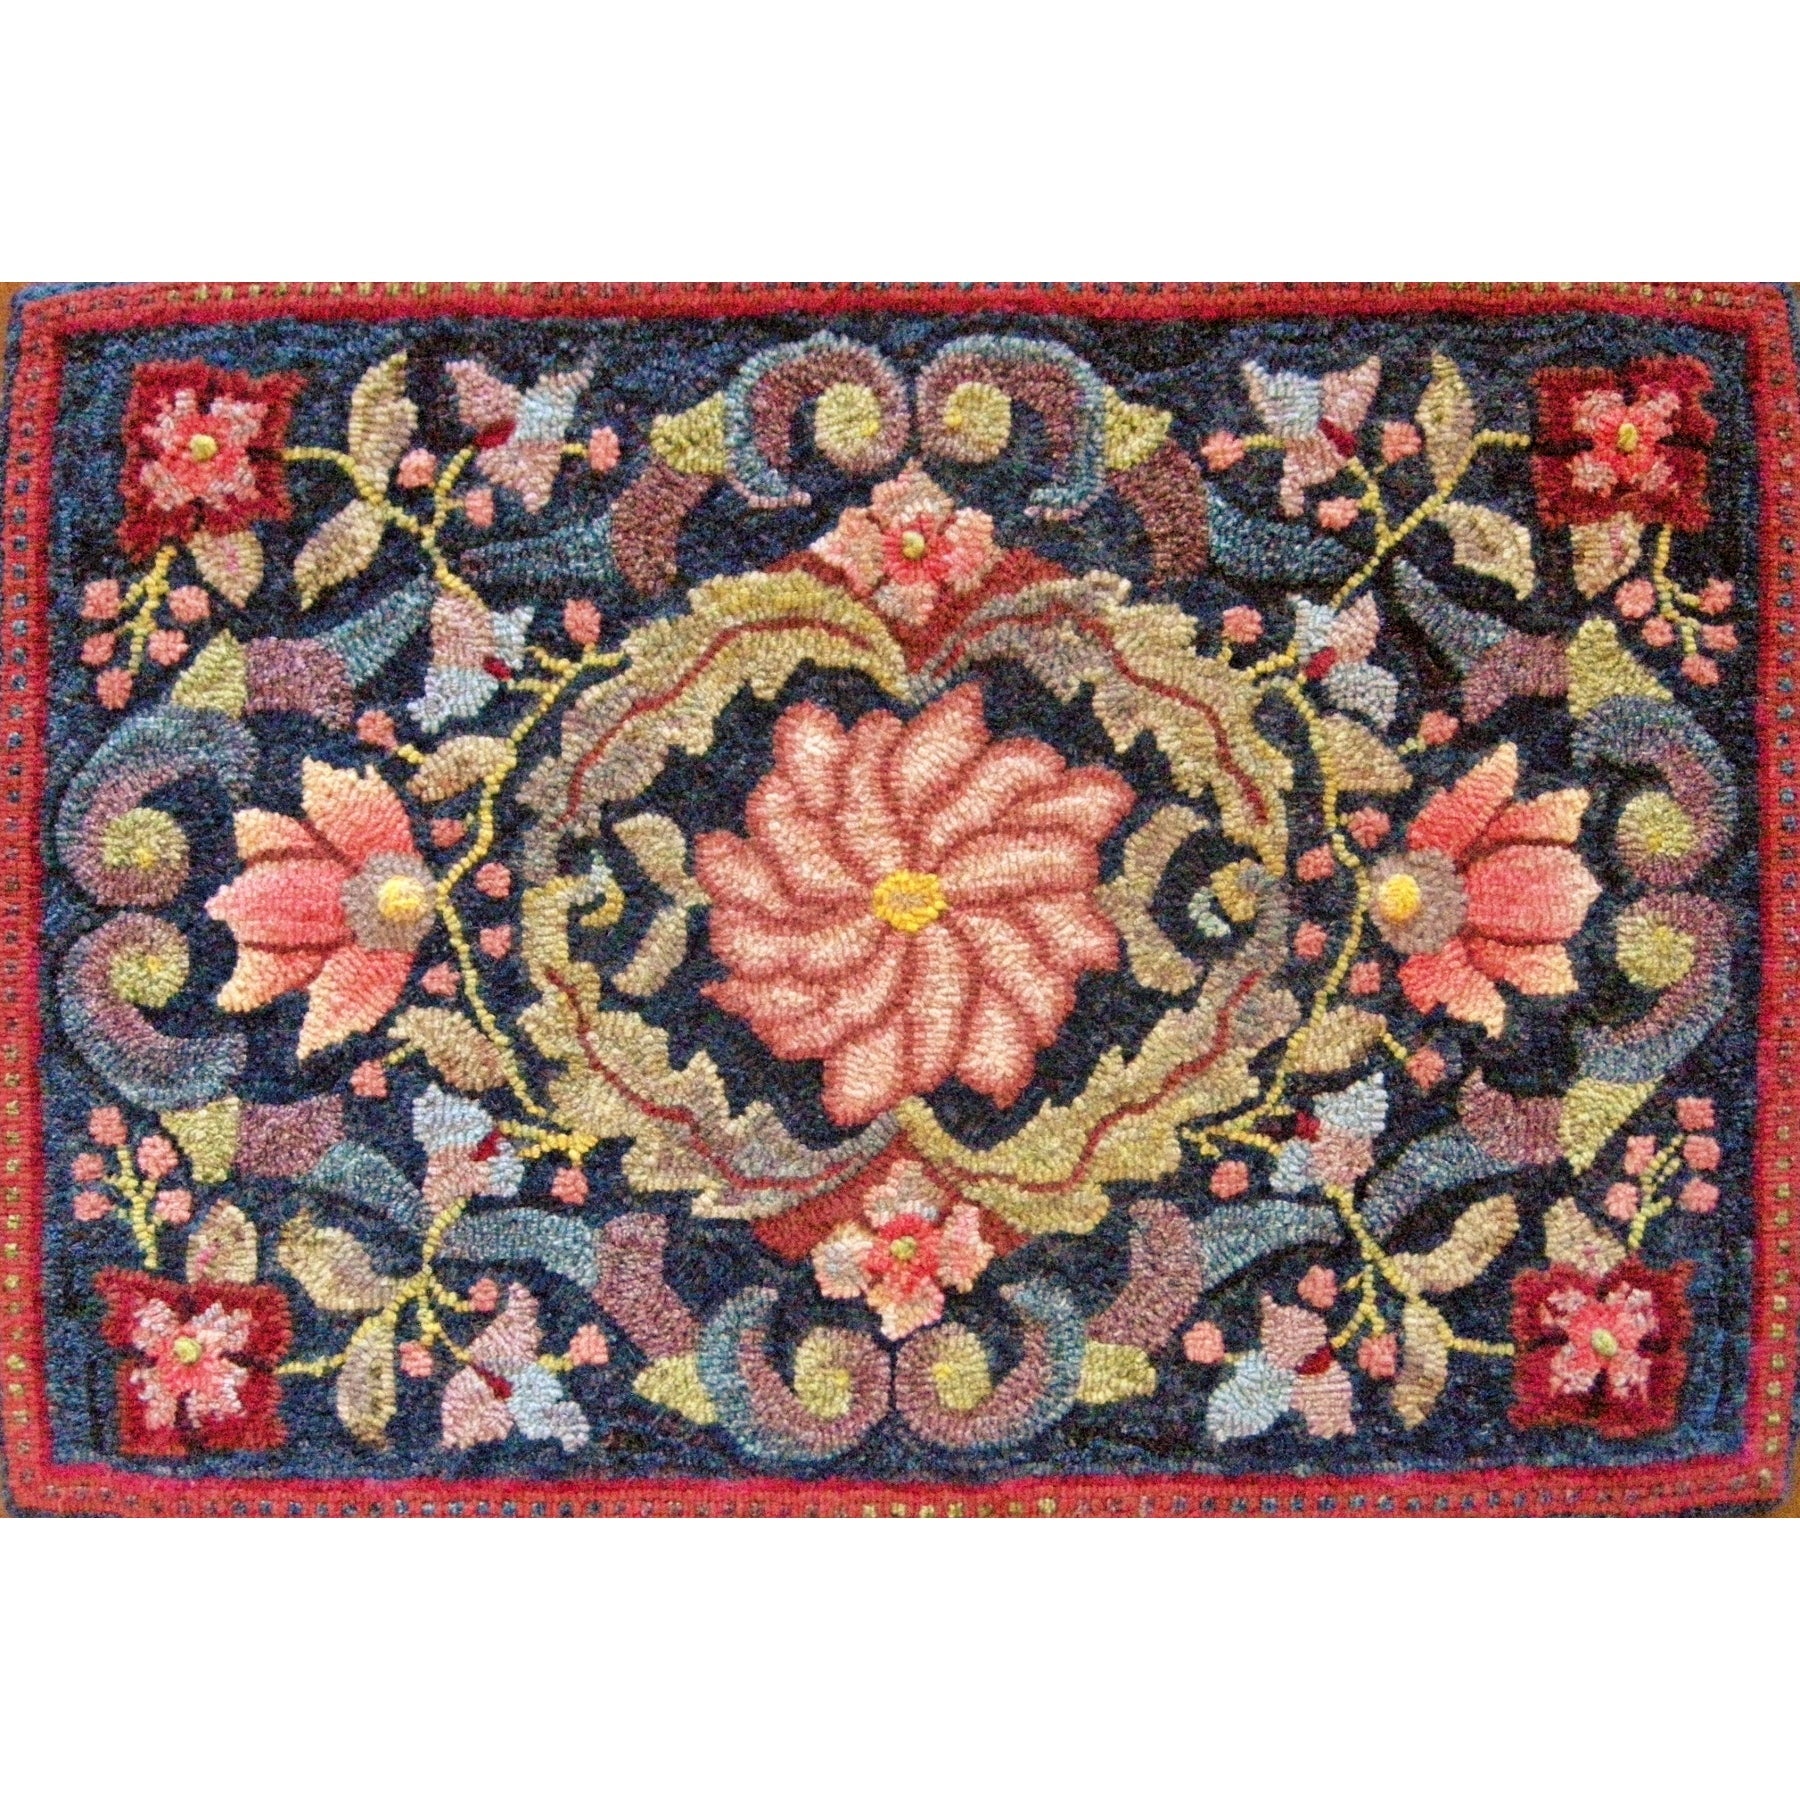 Gem Of Persia, rug hooked by Helen Mar Parkin